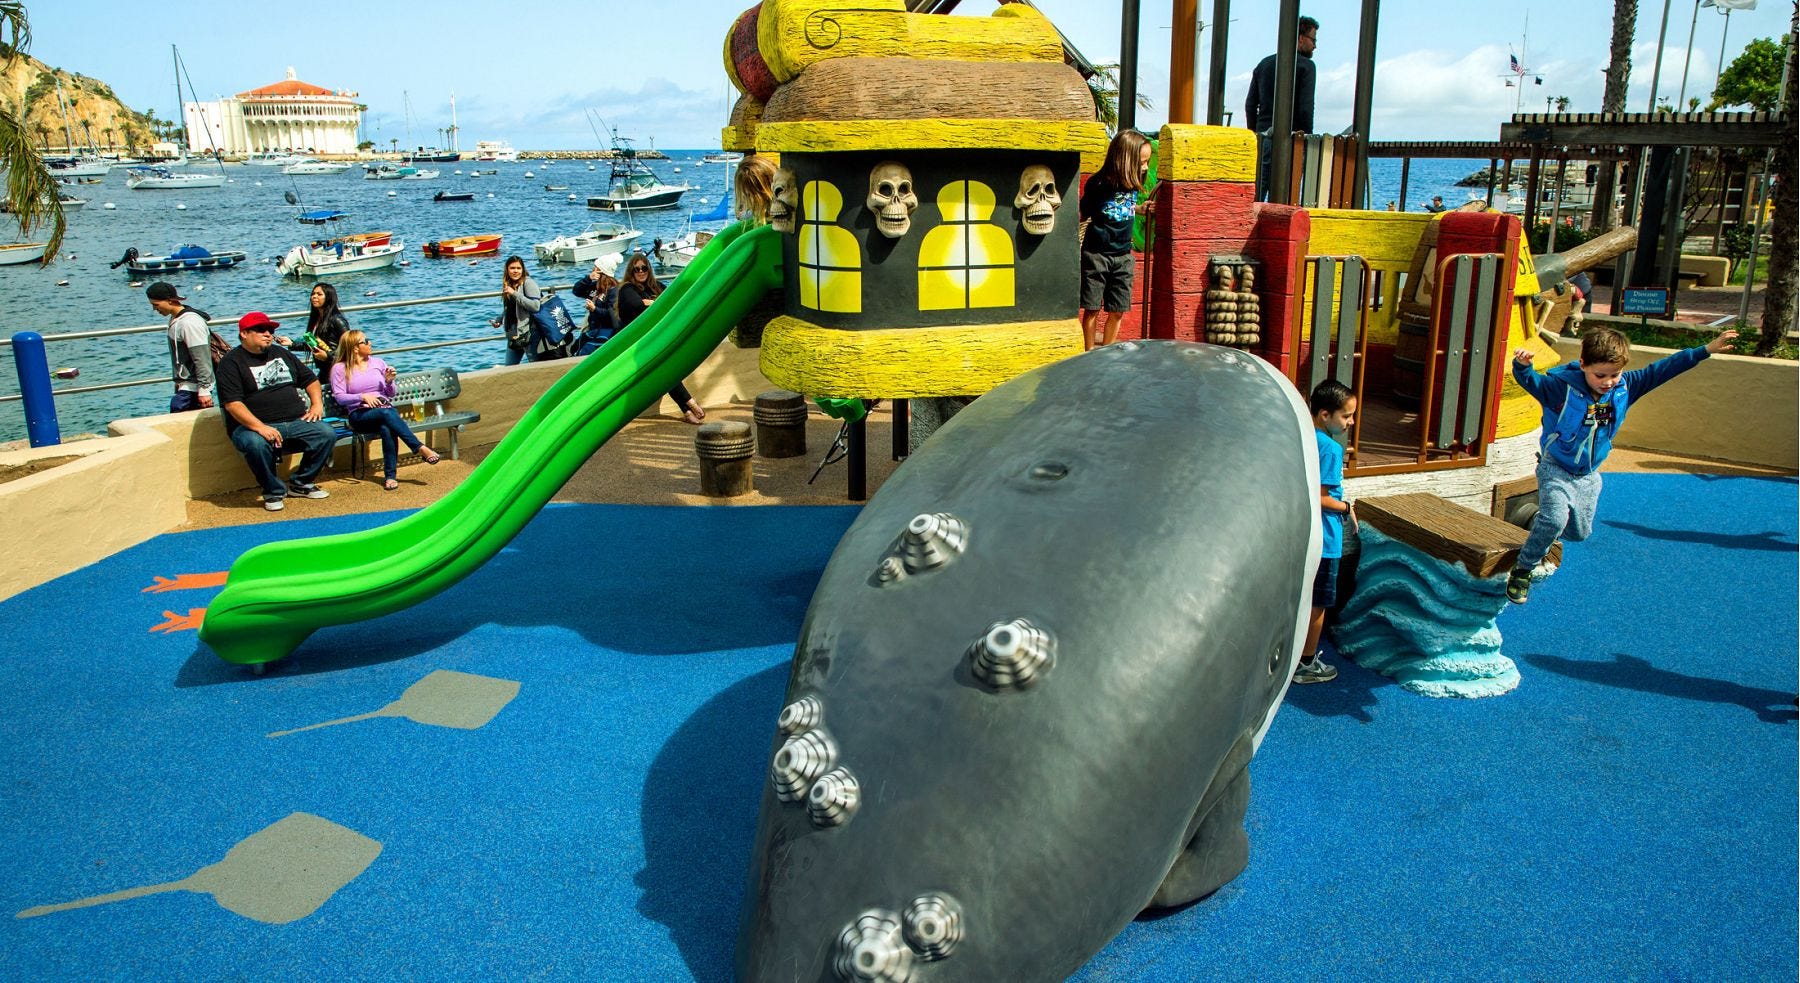 pirate ship themed playground on catalina island